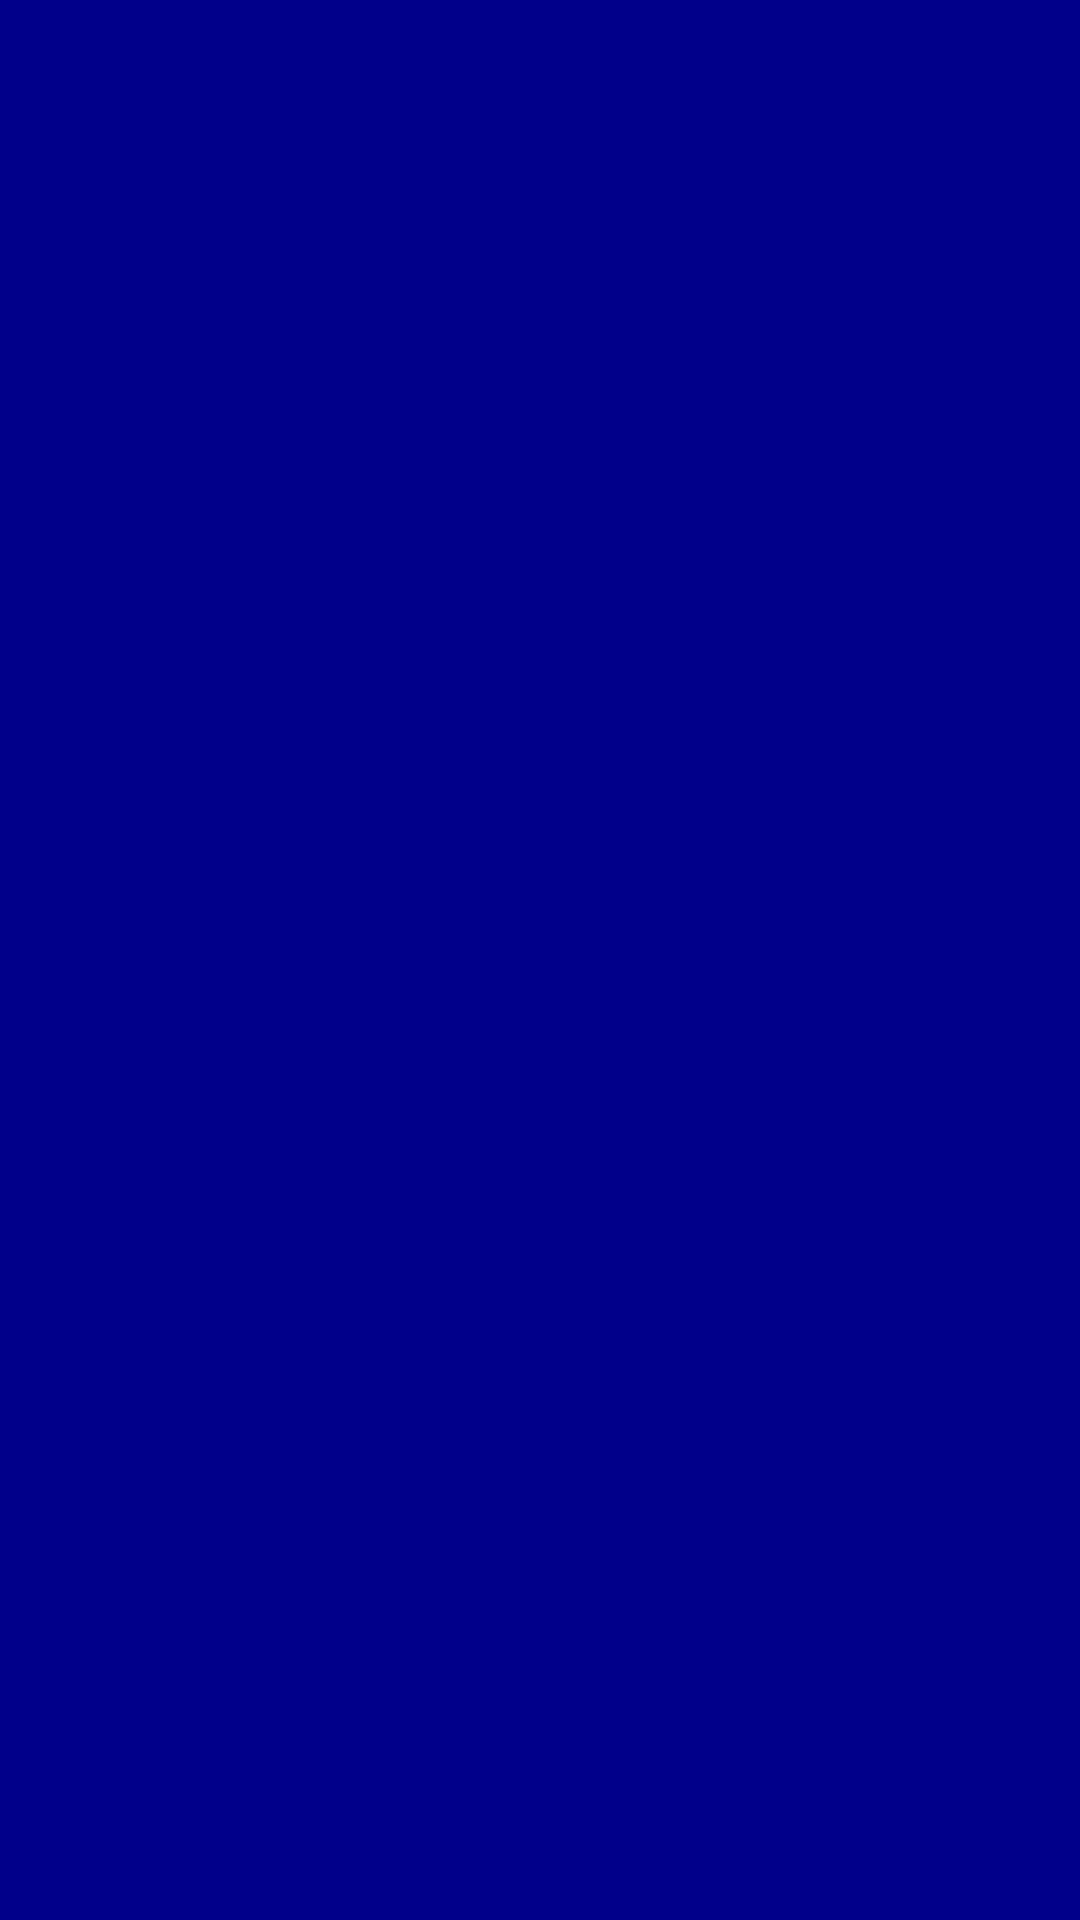 Residuos estrecho Dos grados azul marino - Códigos de color RVA, CMYK